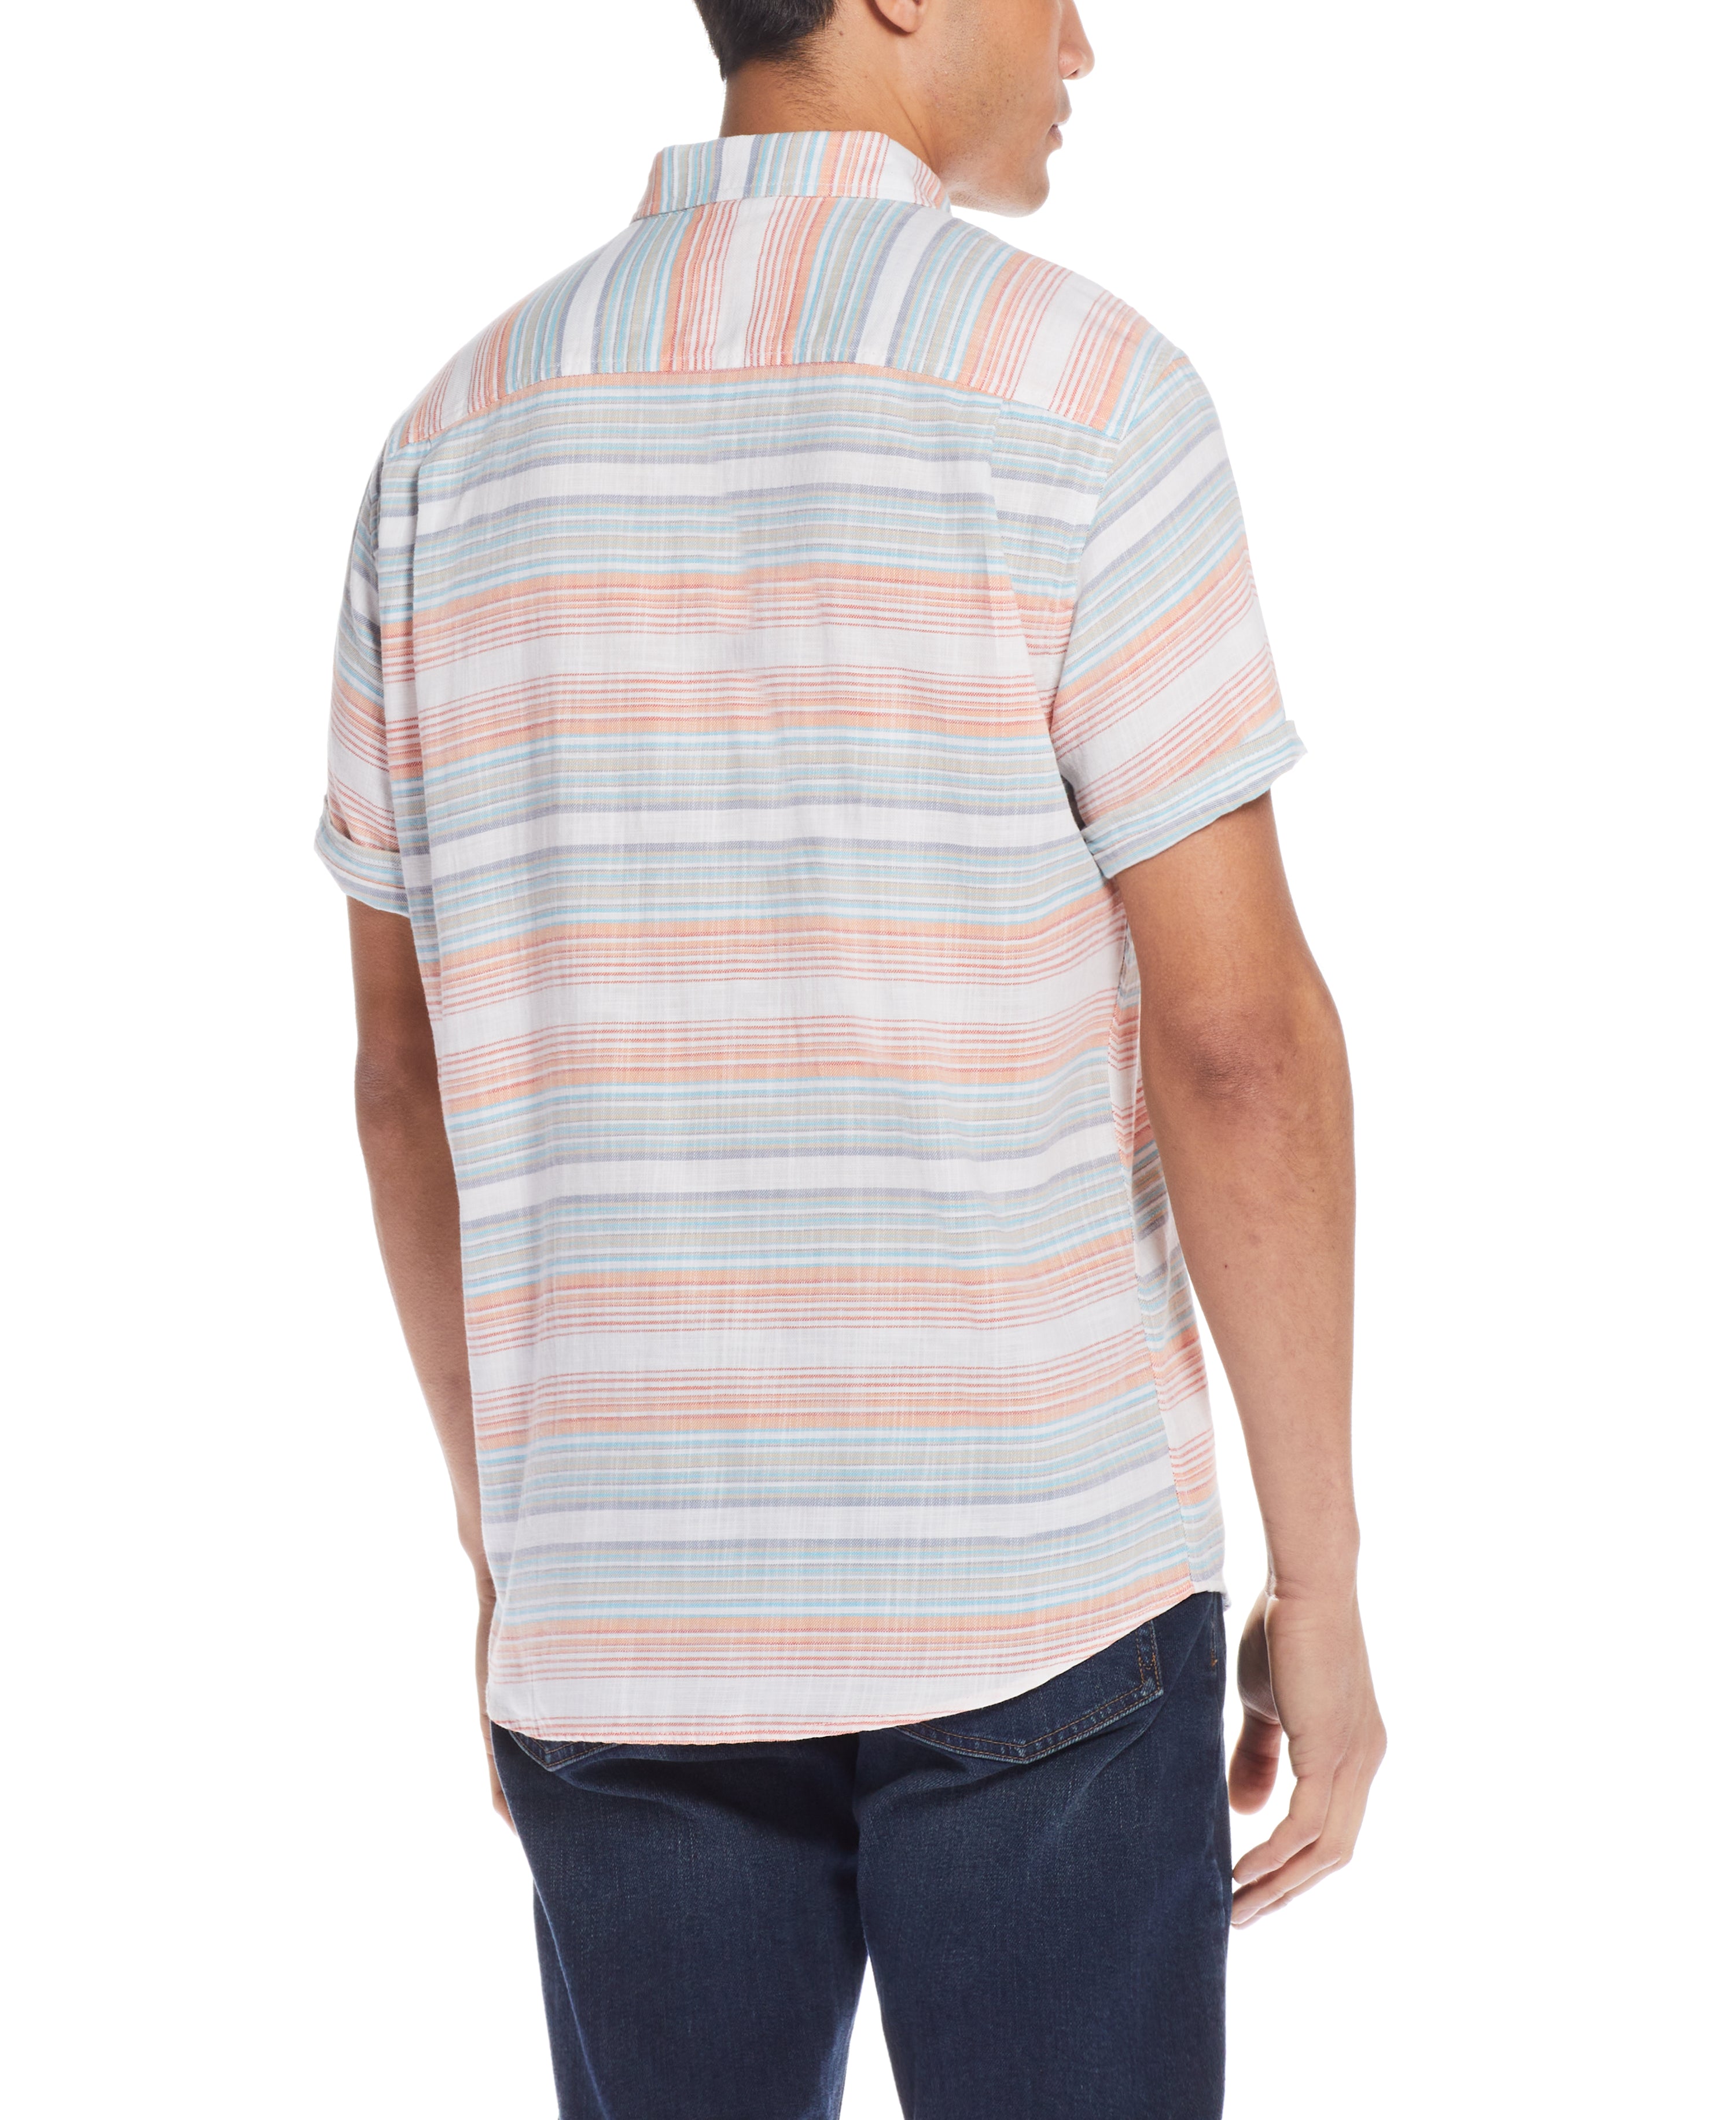 Stripe Country Twill Shirt in Papaya